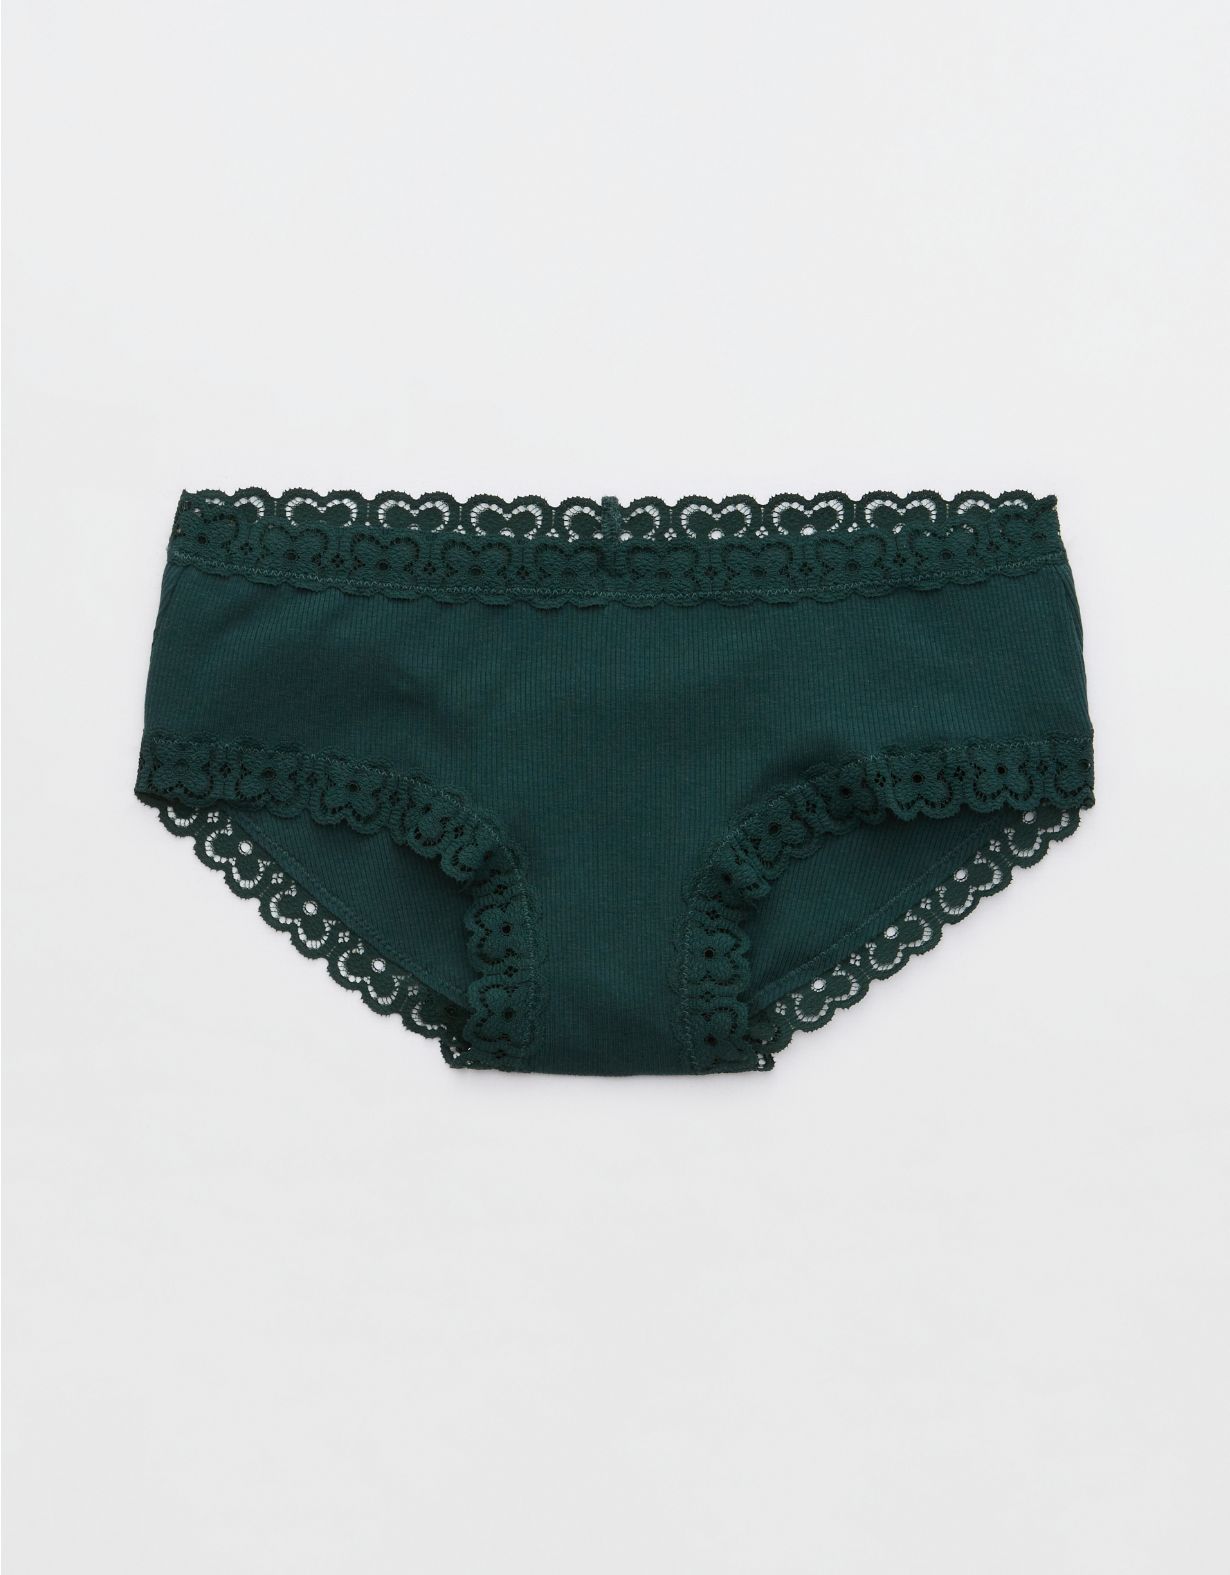 Superchill Cotton Cozy Lace Boybrief Underwear